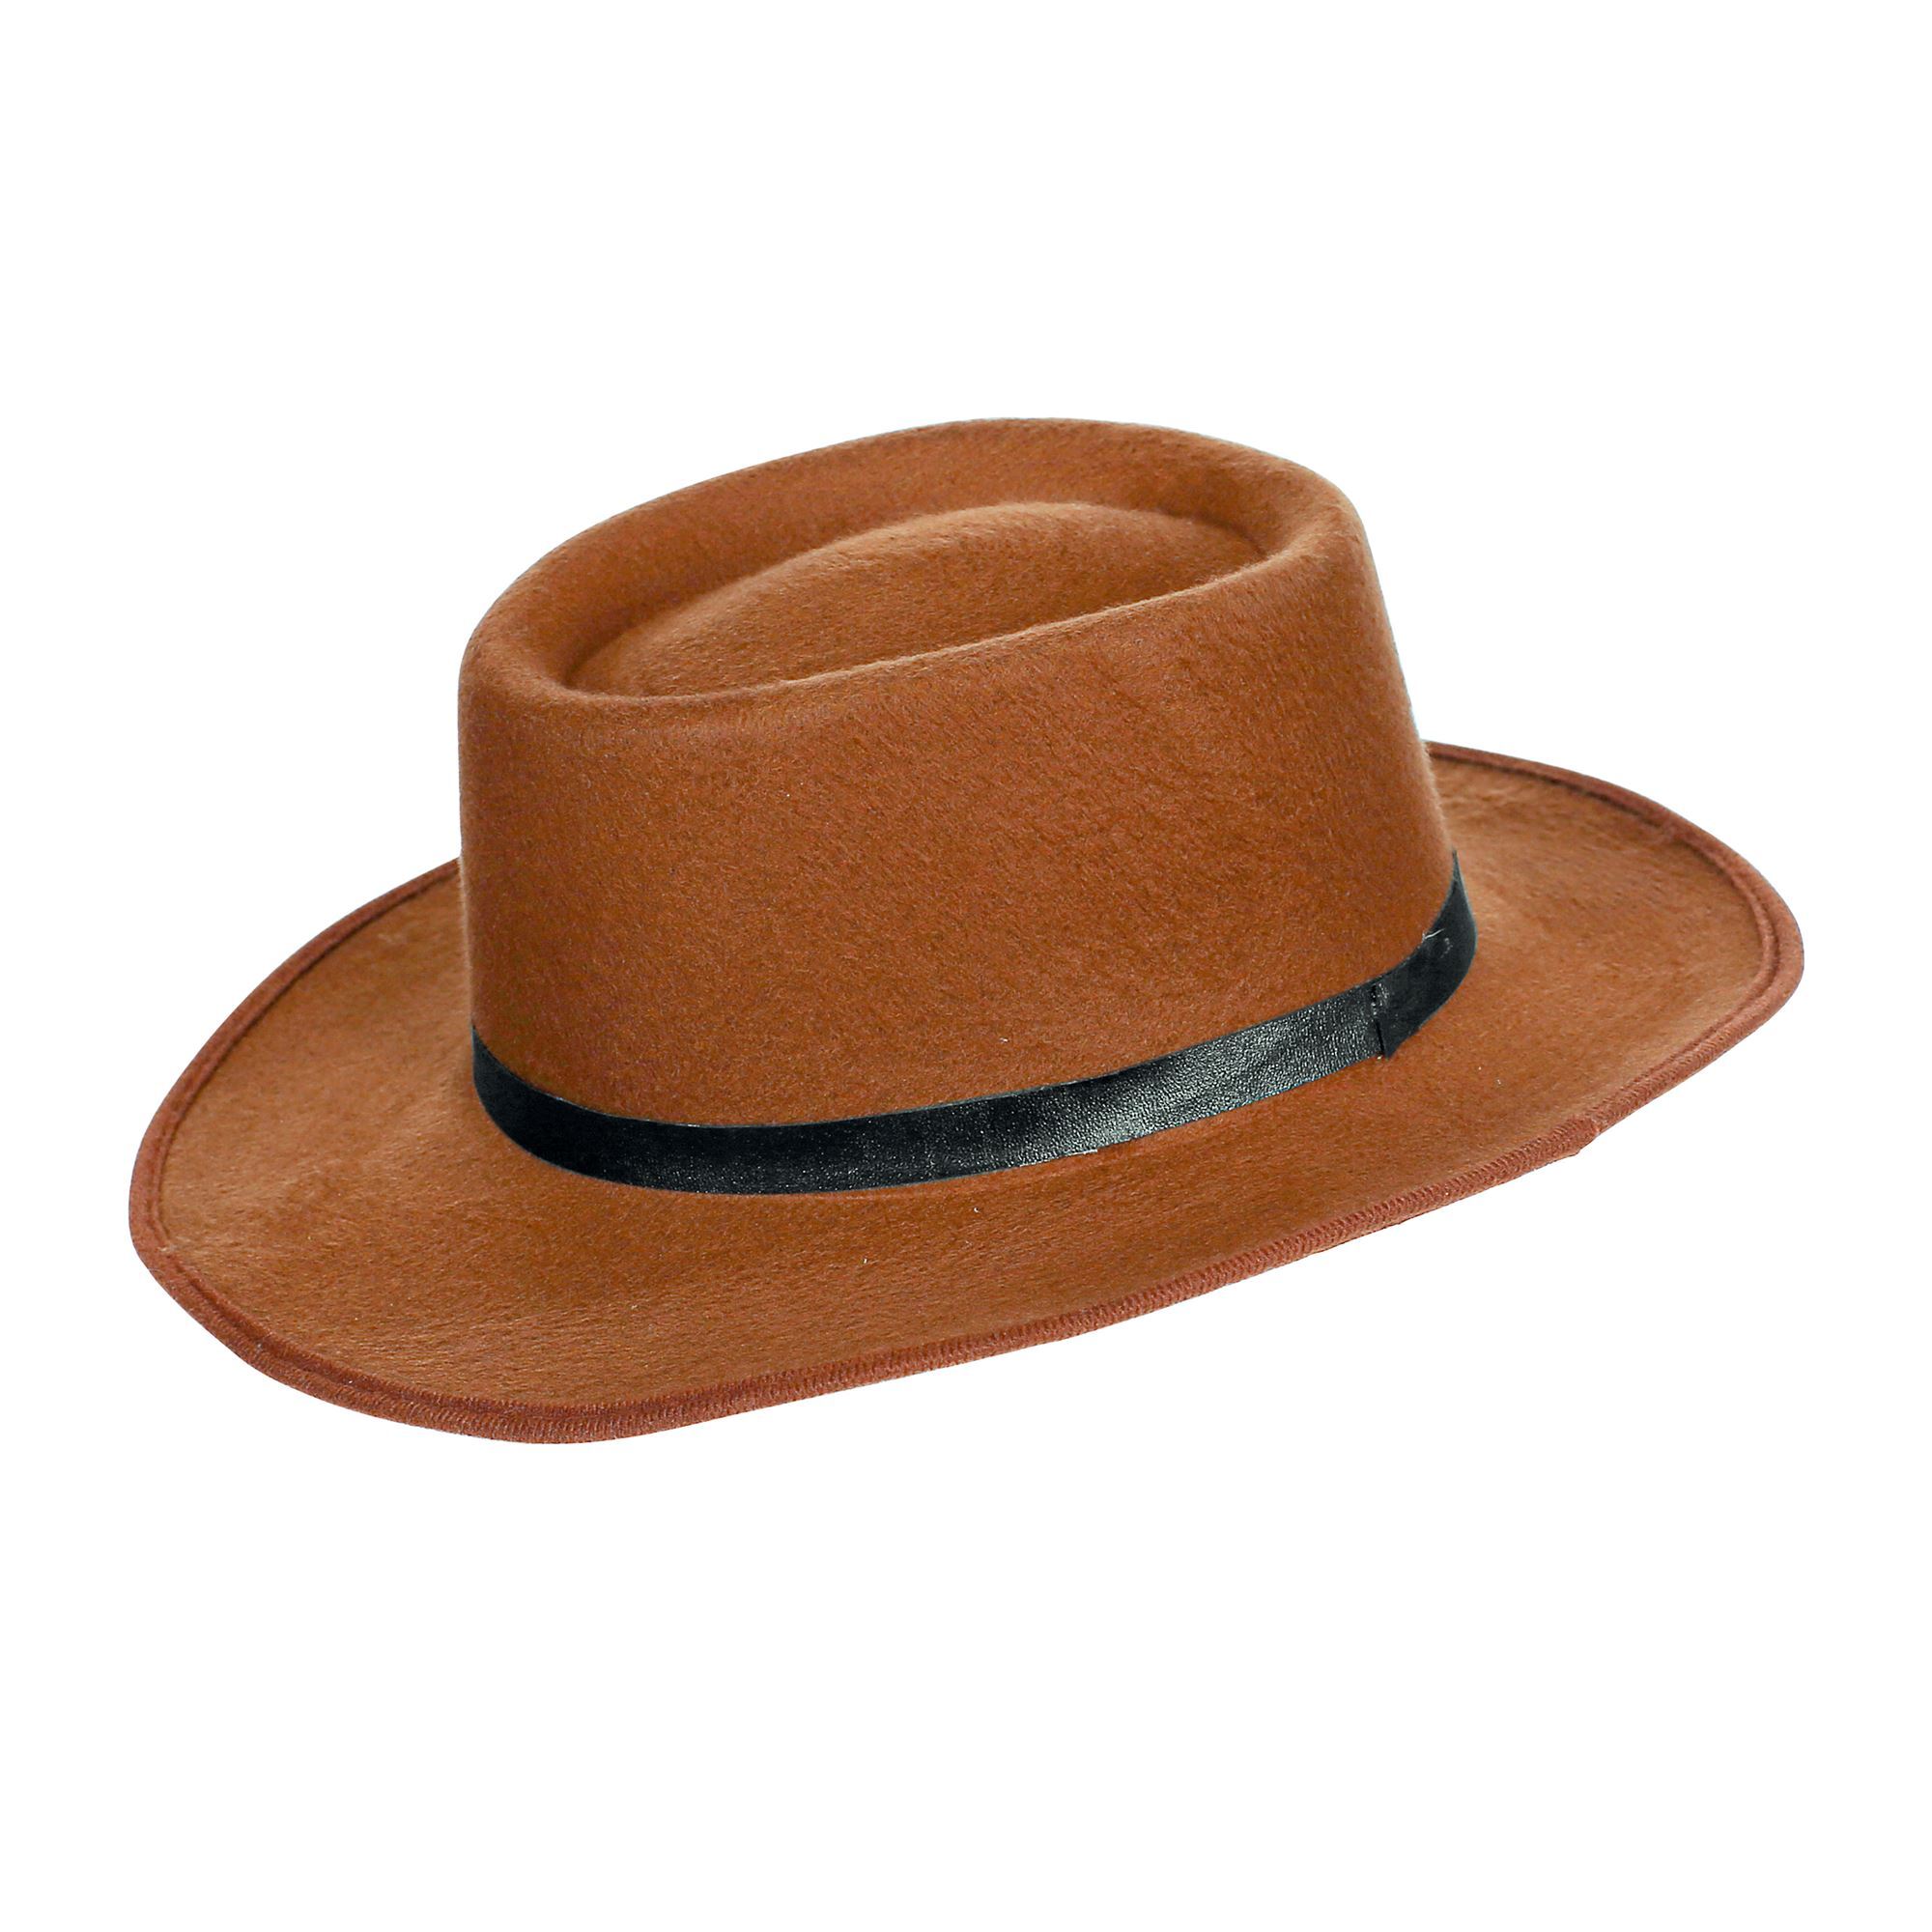 Bruine cowboy hoed gaucho brazilaans